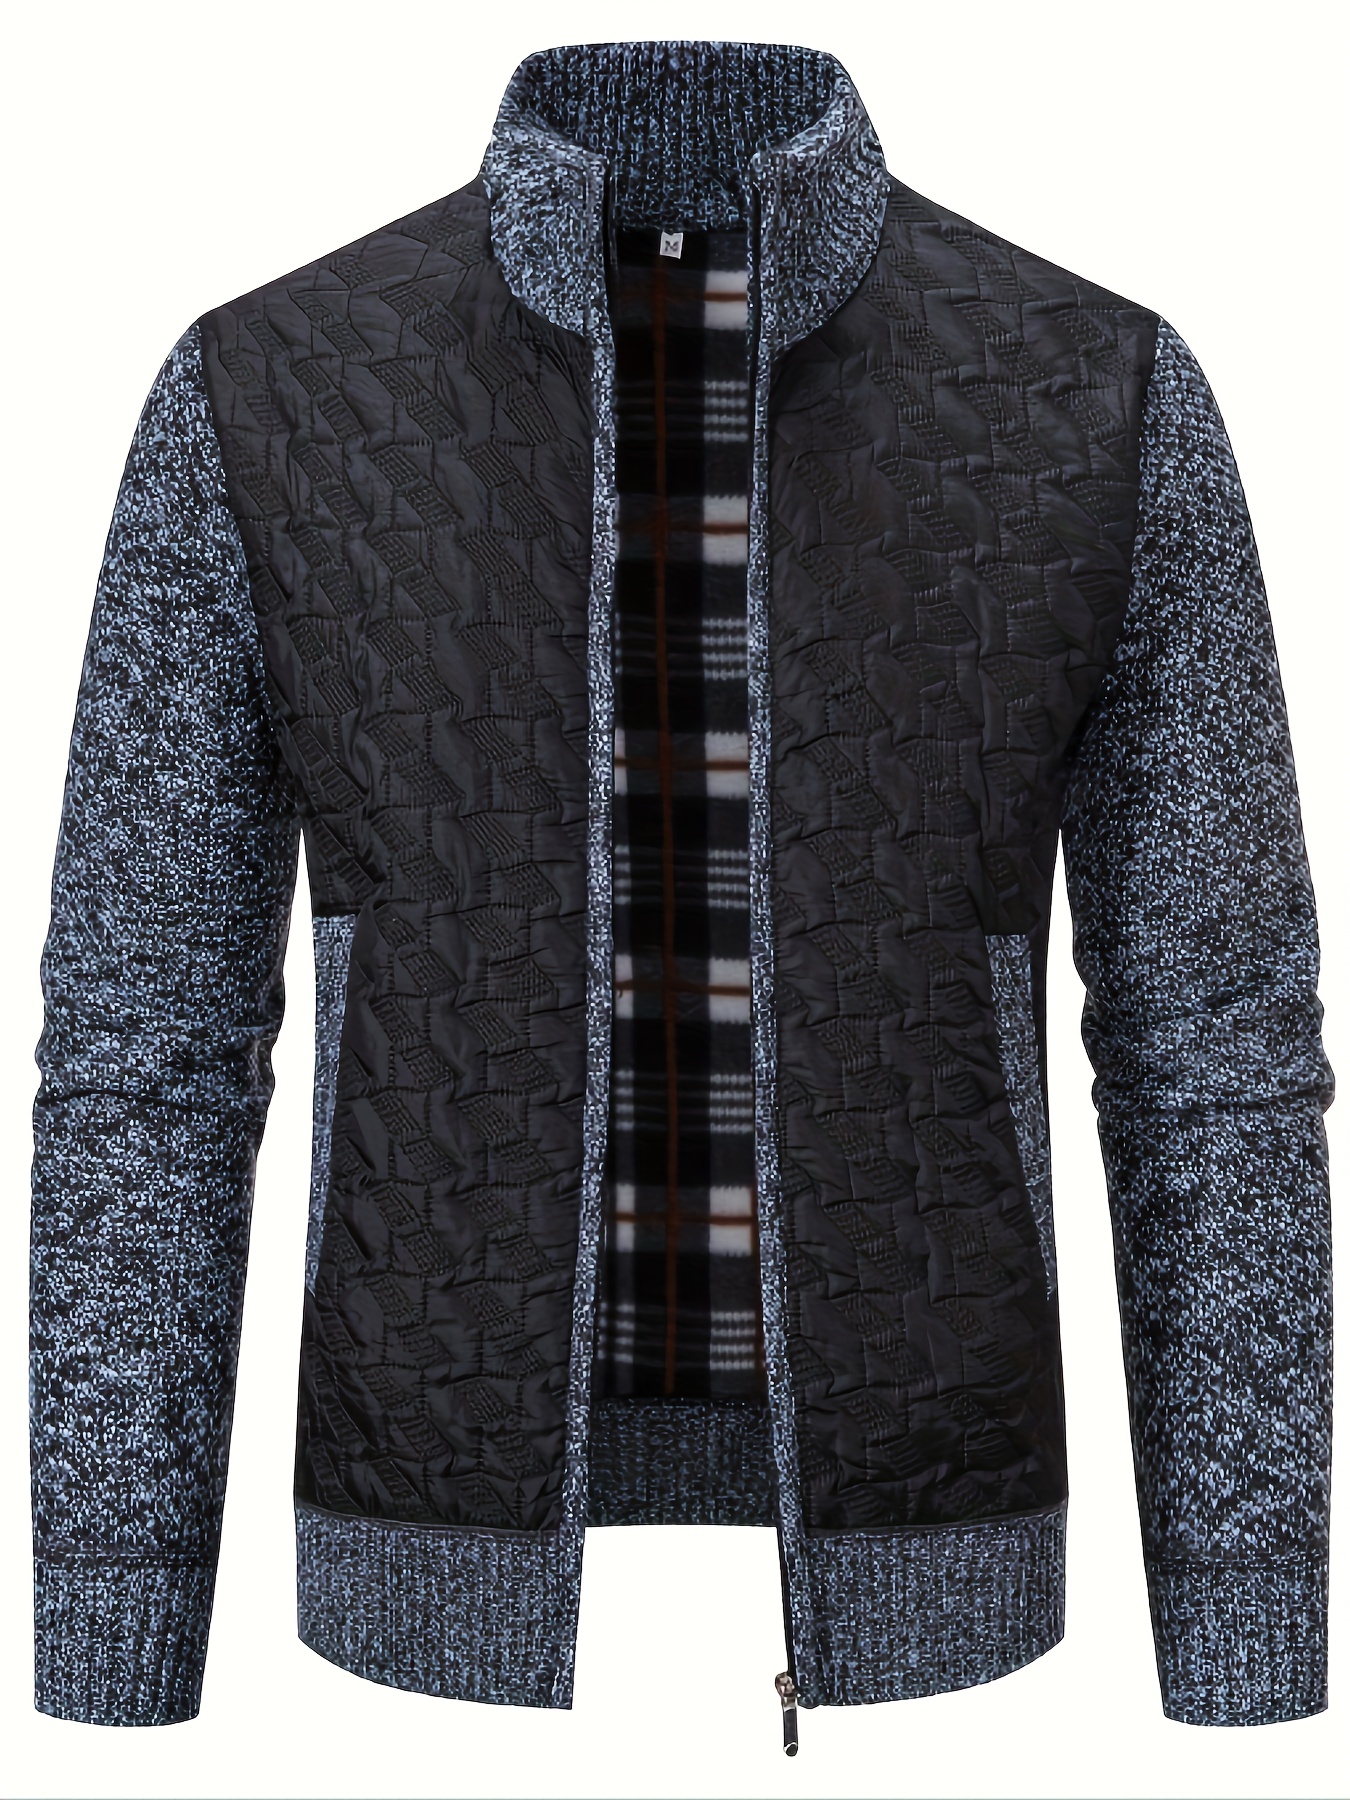 Cárdigan de lana para hombre con cremallera, suéter de punto de lana gruesa  casual de manga larga con bolsillos